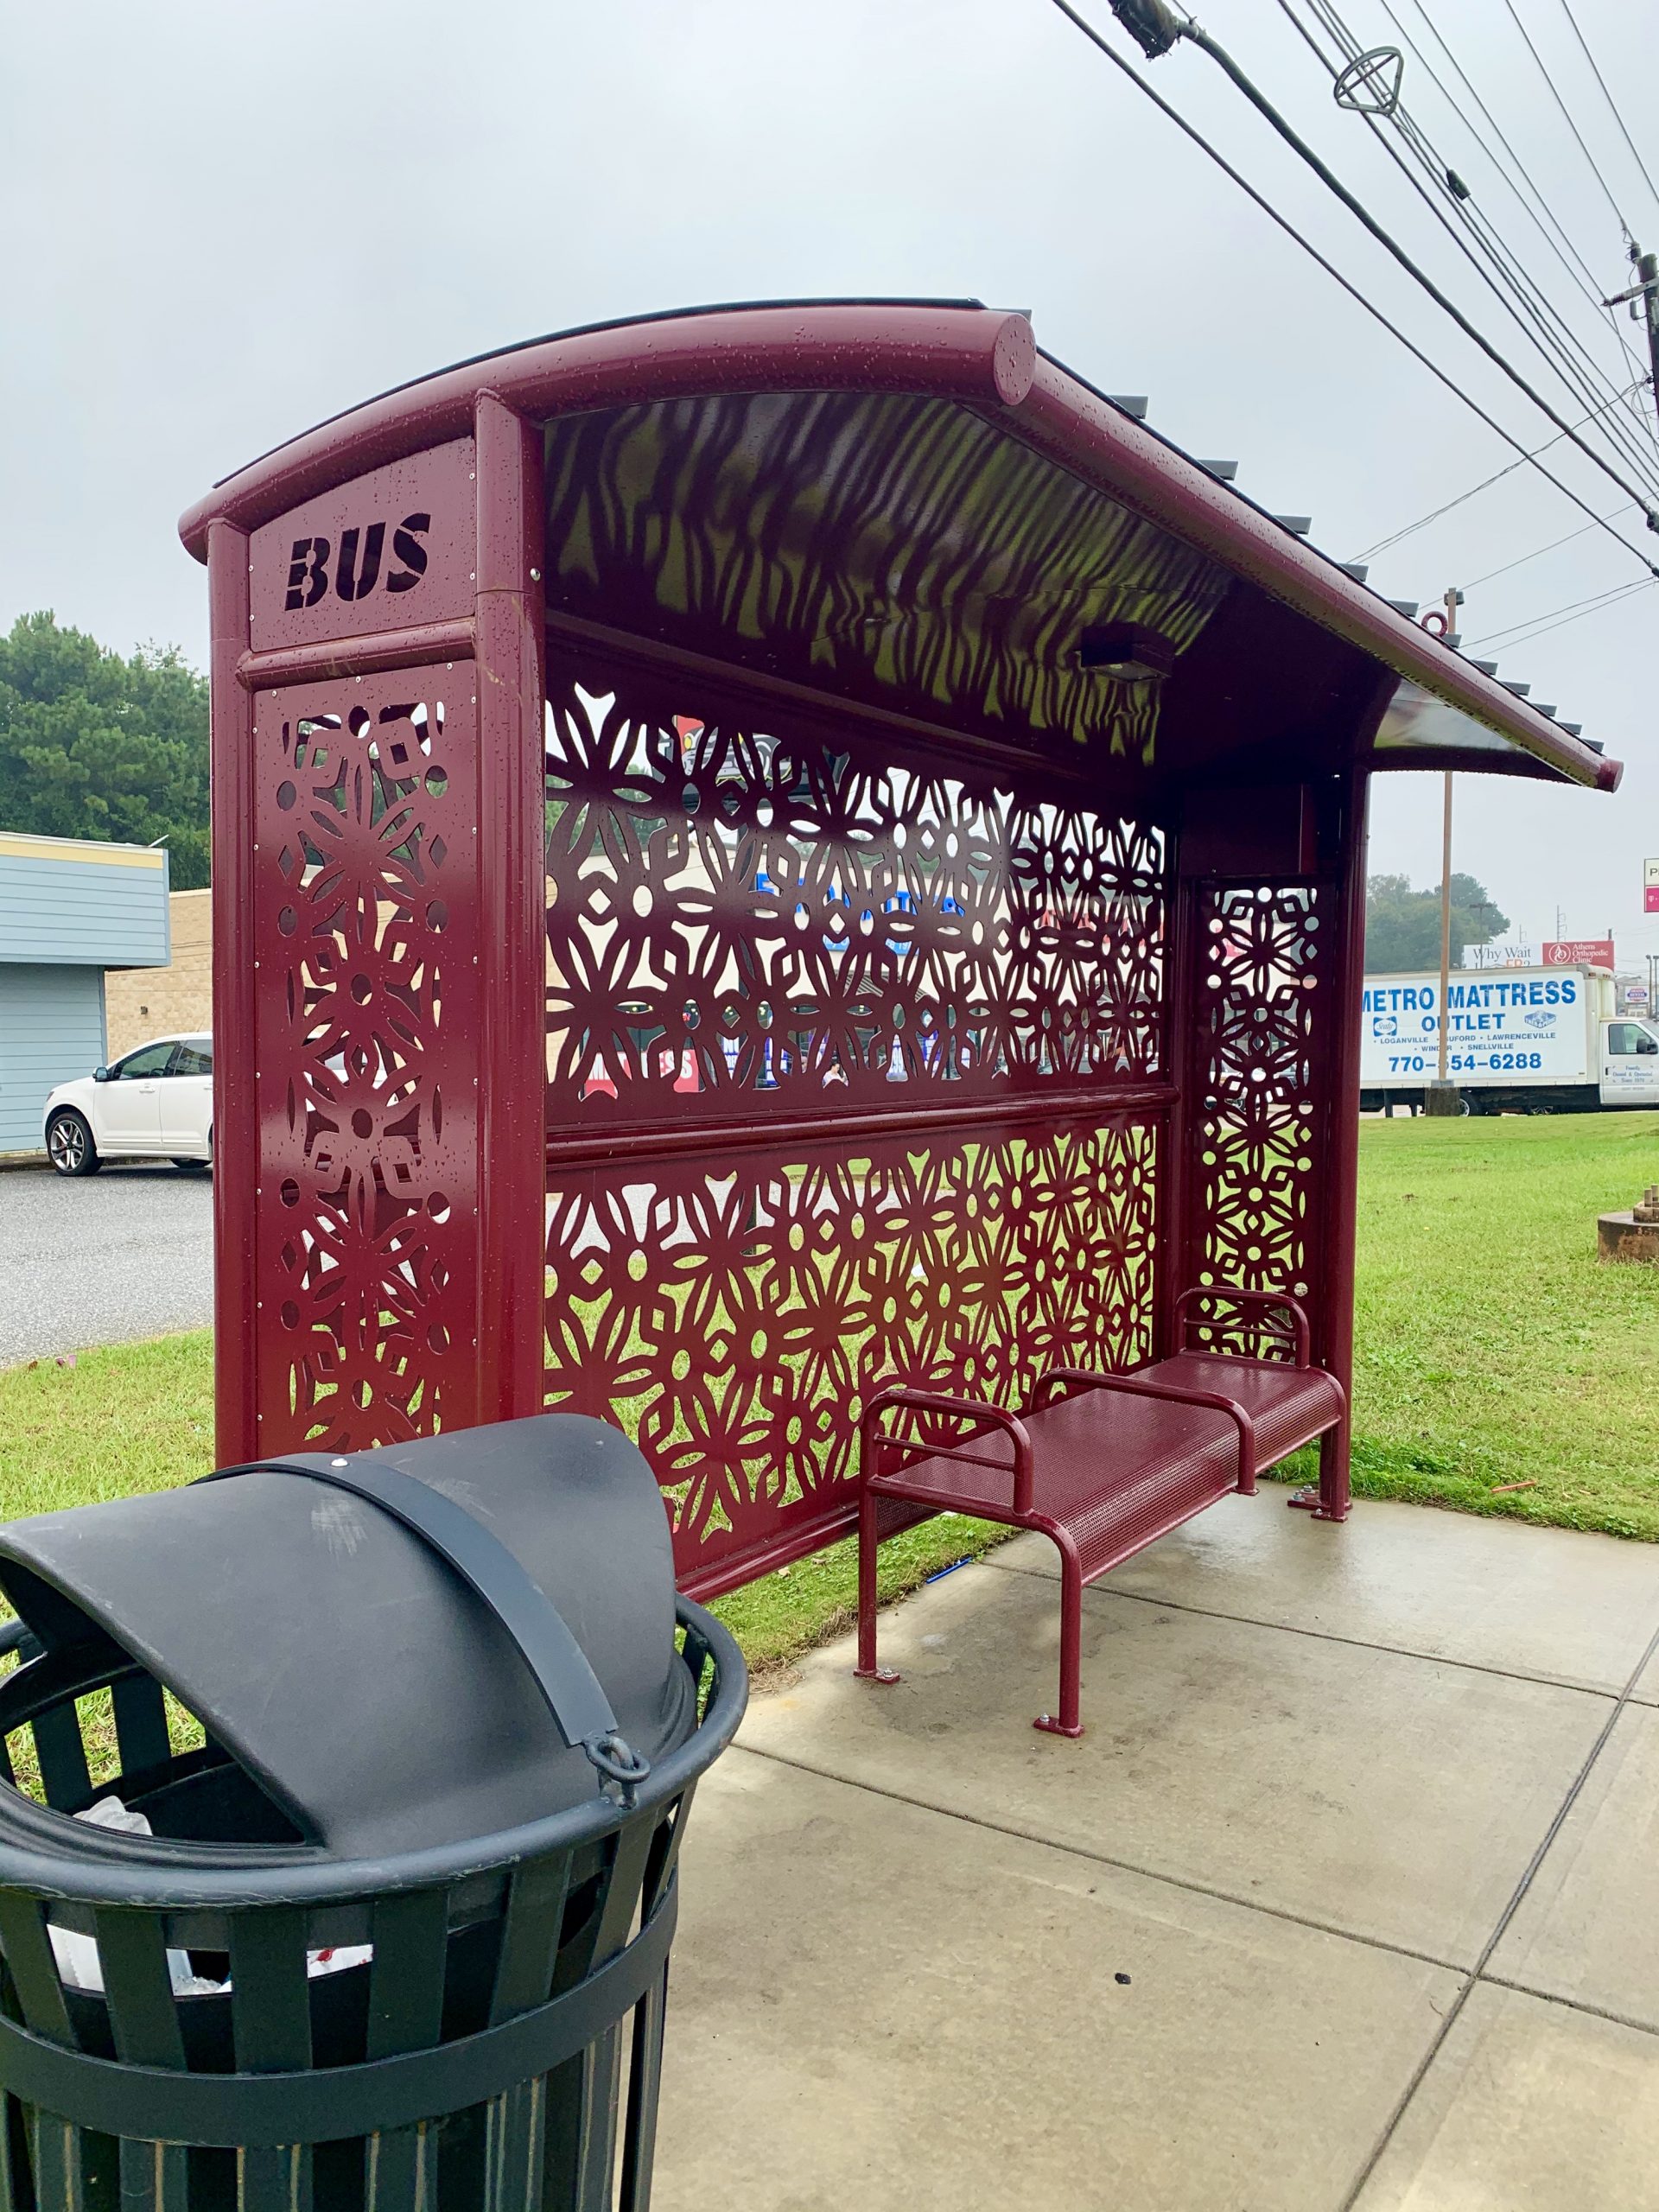 Bus Shelter Type II, Athens-Clarke , Georgia